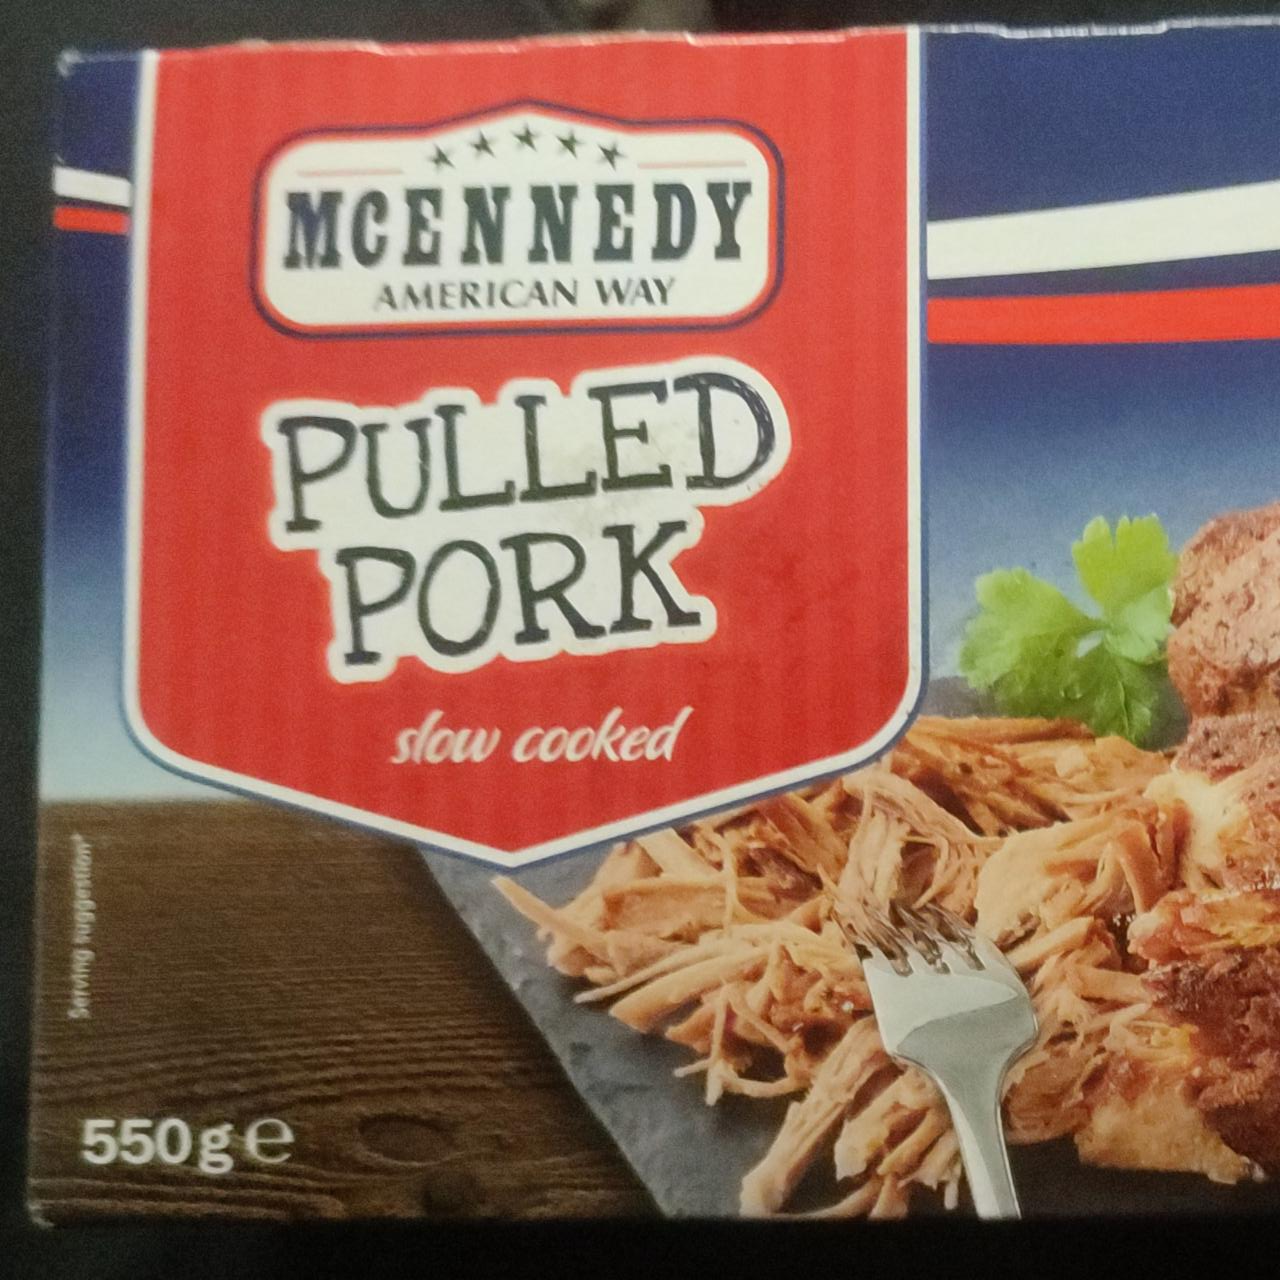 Zdjęcia - Pulled pork McEnnedy American Way